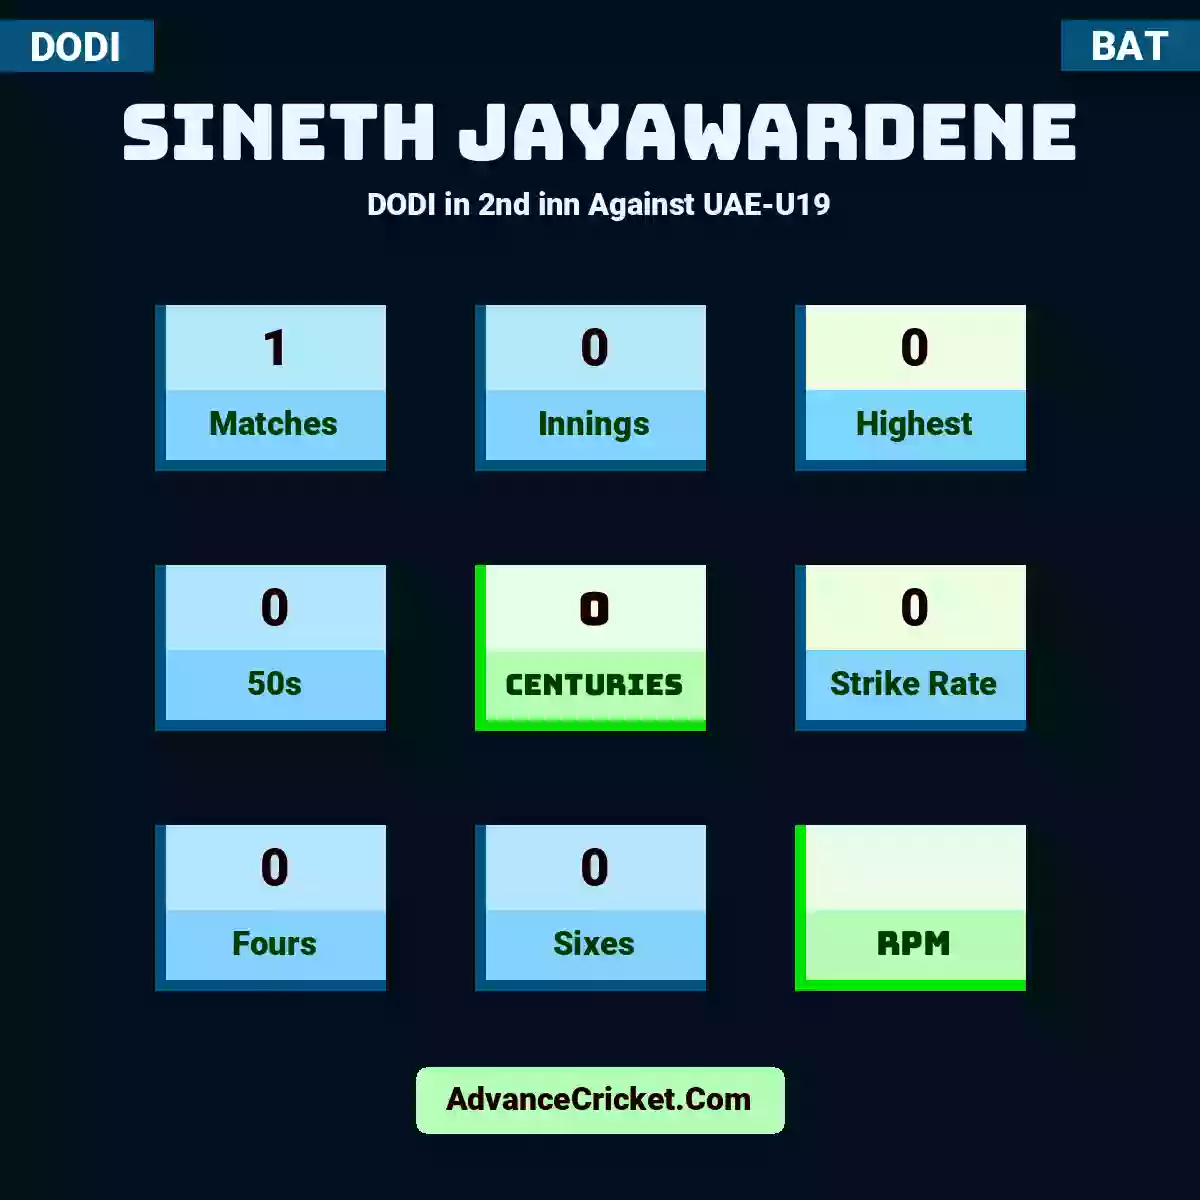 Sineth Jayawardene DODI  in 2nd inn Against UAE-U19, Sineth Jayawardene played 1 matches, scored 0 runs as highest, 0 half-centuries, and 0 centuries, with a strike rate of 0. S.Jayawardene hit 0 fours and 0 sixes.